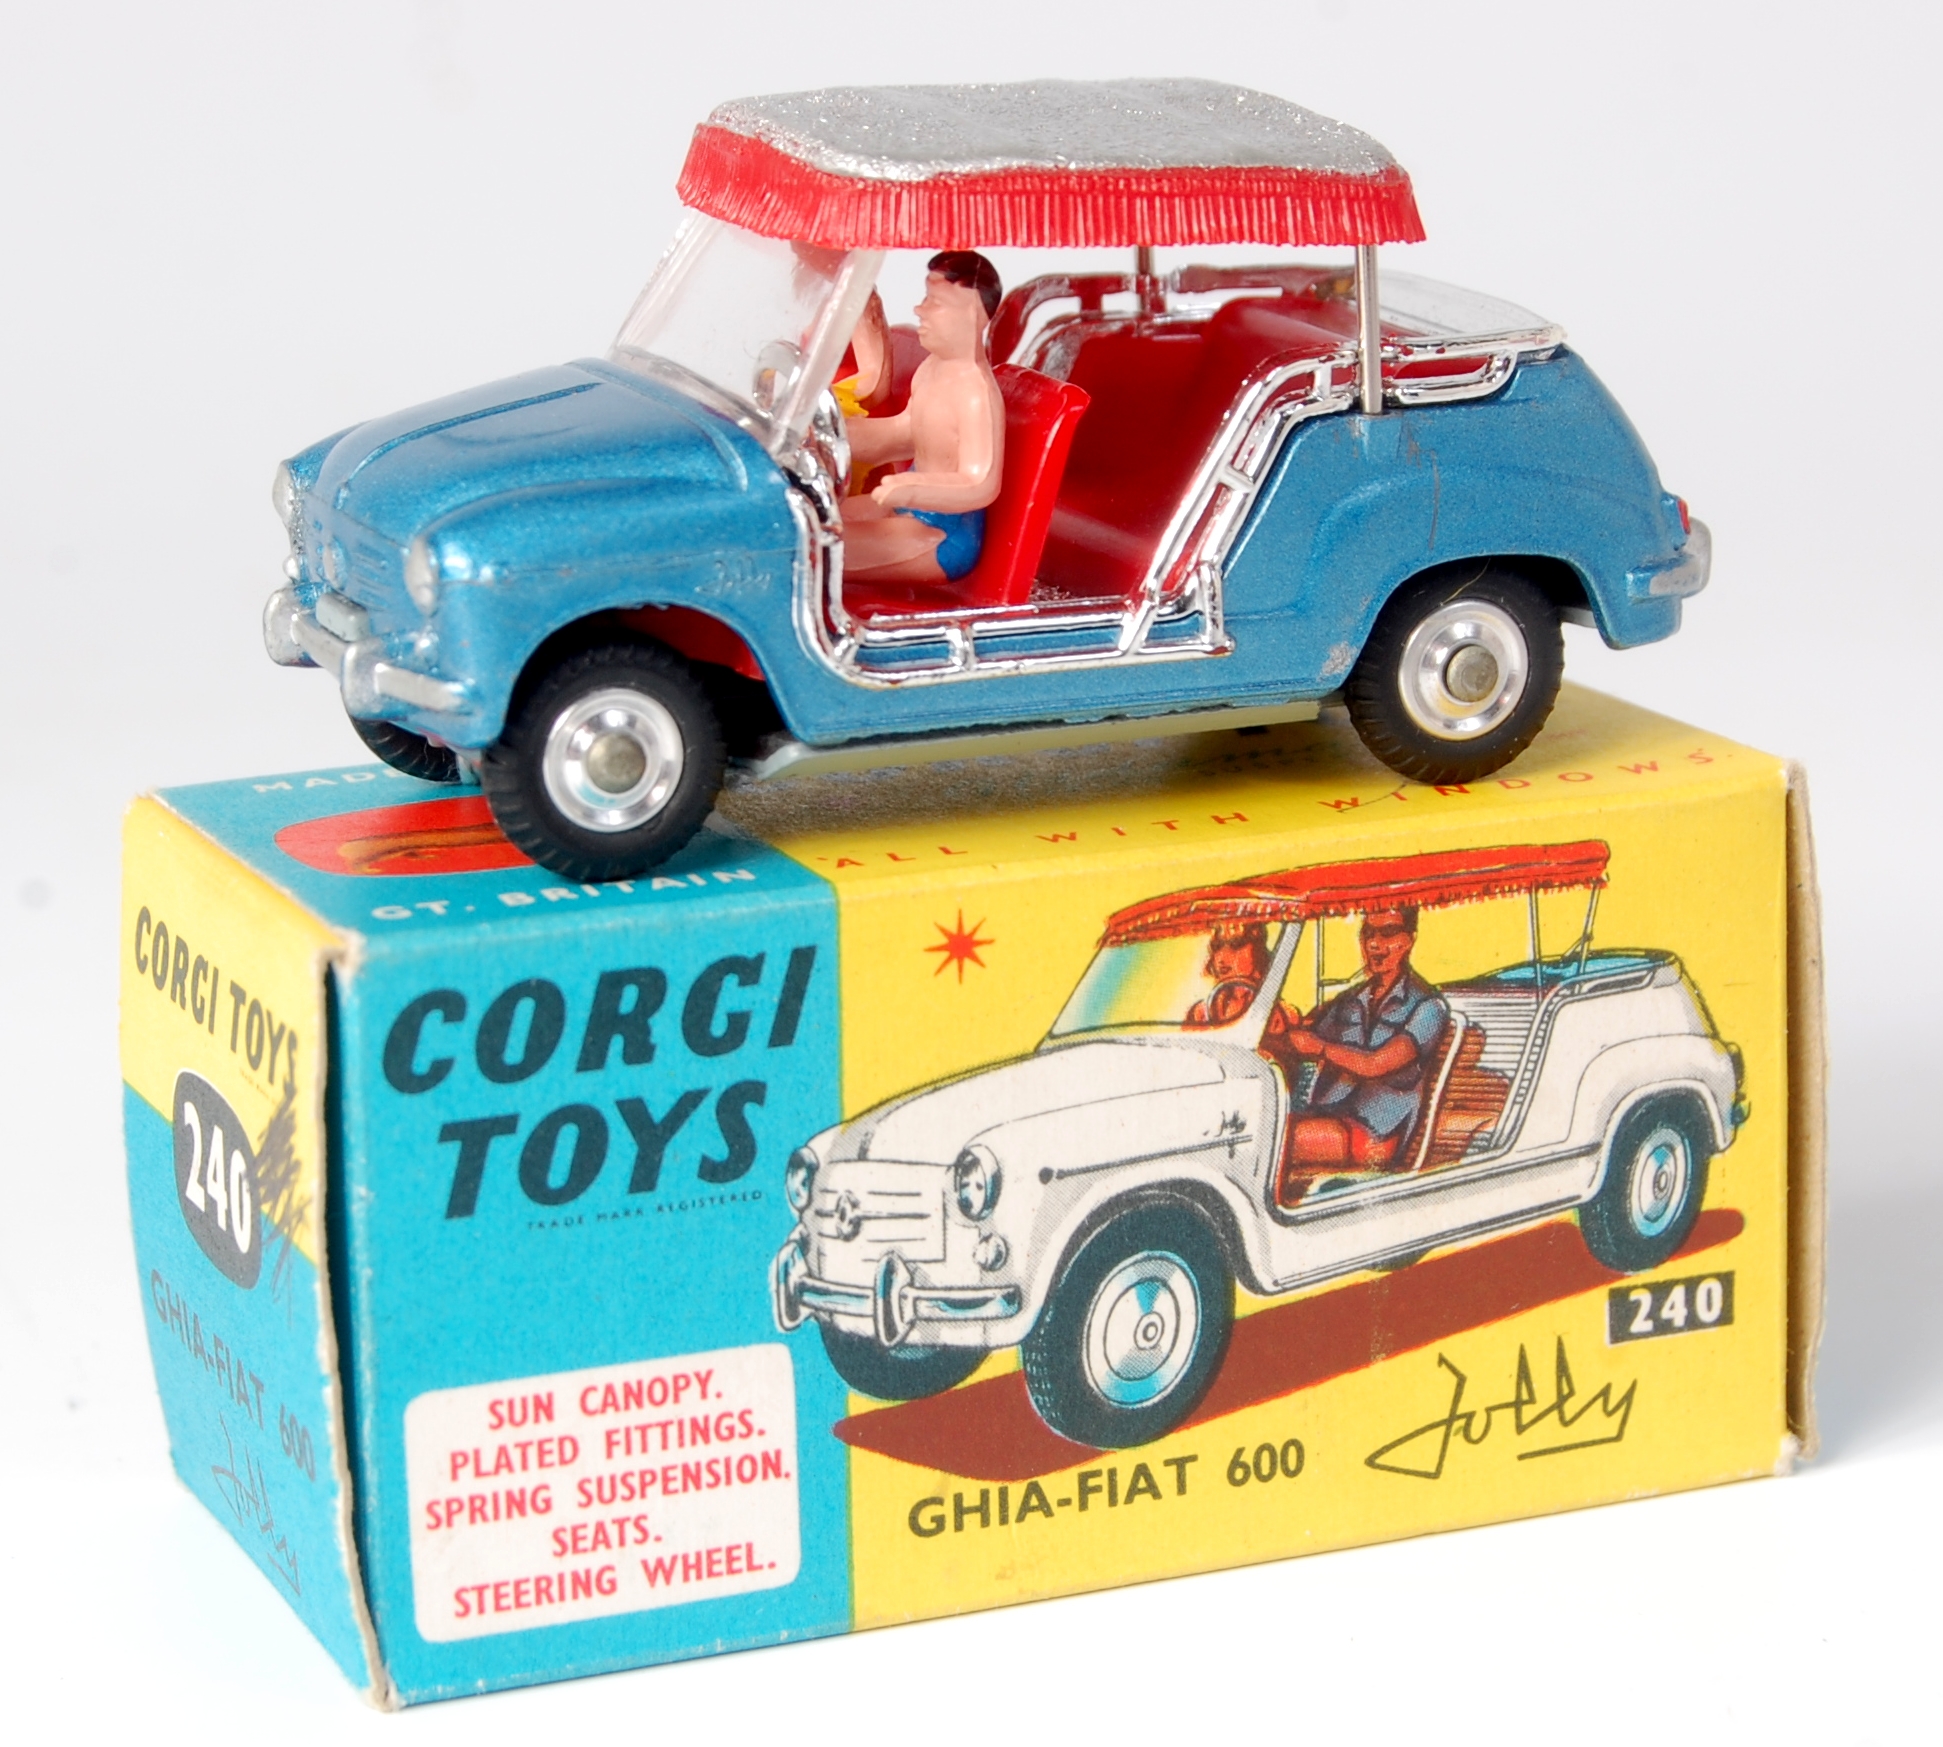 Corgi Toys, 240 Fiat 600 Jolly, metallic blue body, red interior, silver and red canopy, spun hubs